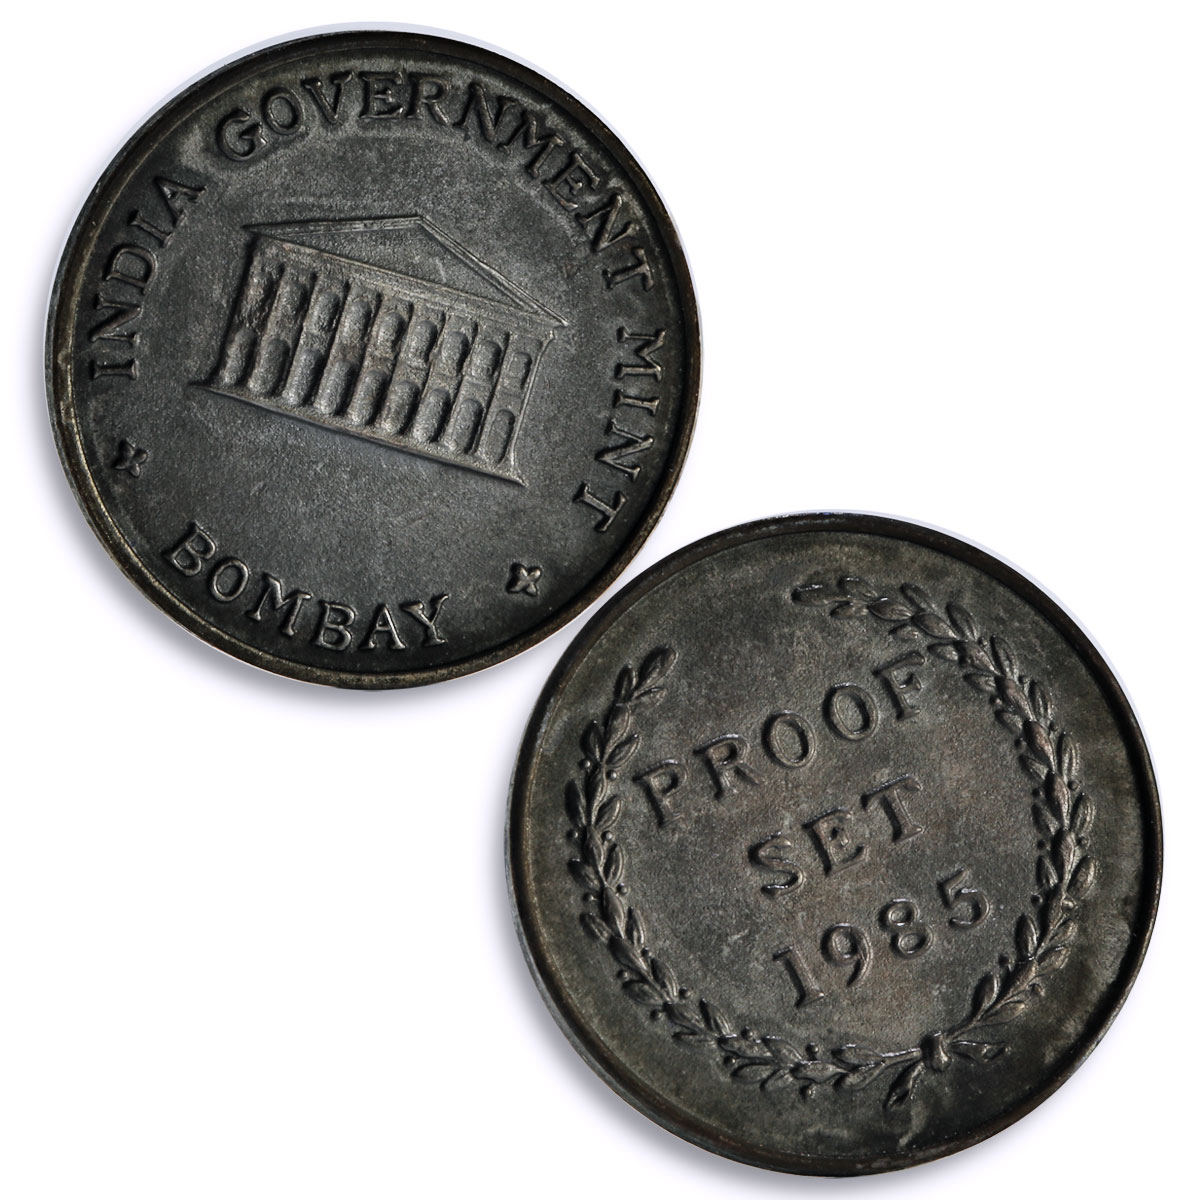 India set of 4 Indira Gandhi Death Anniversary Politics proof silver coins 1985